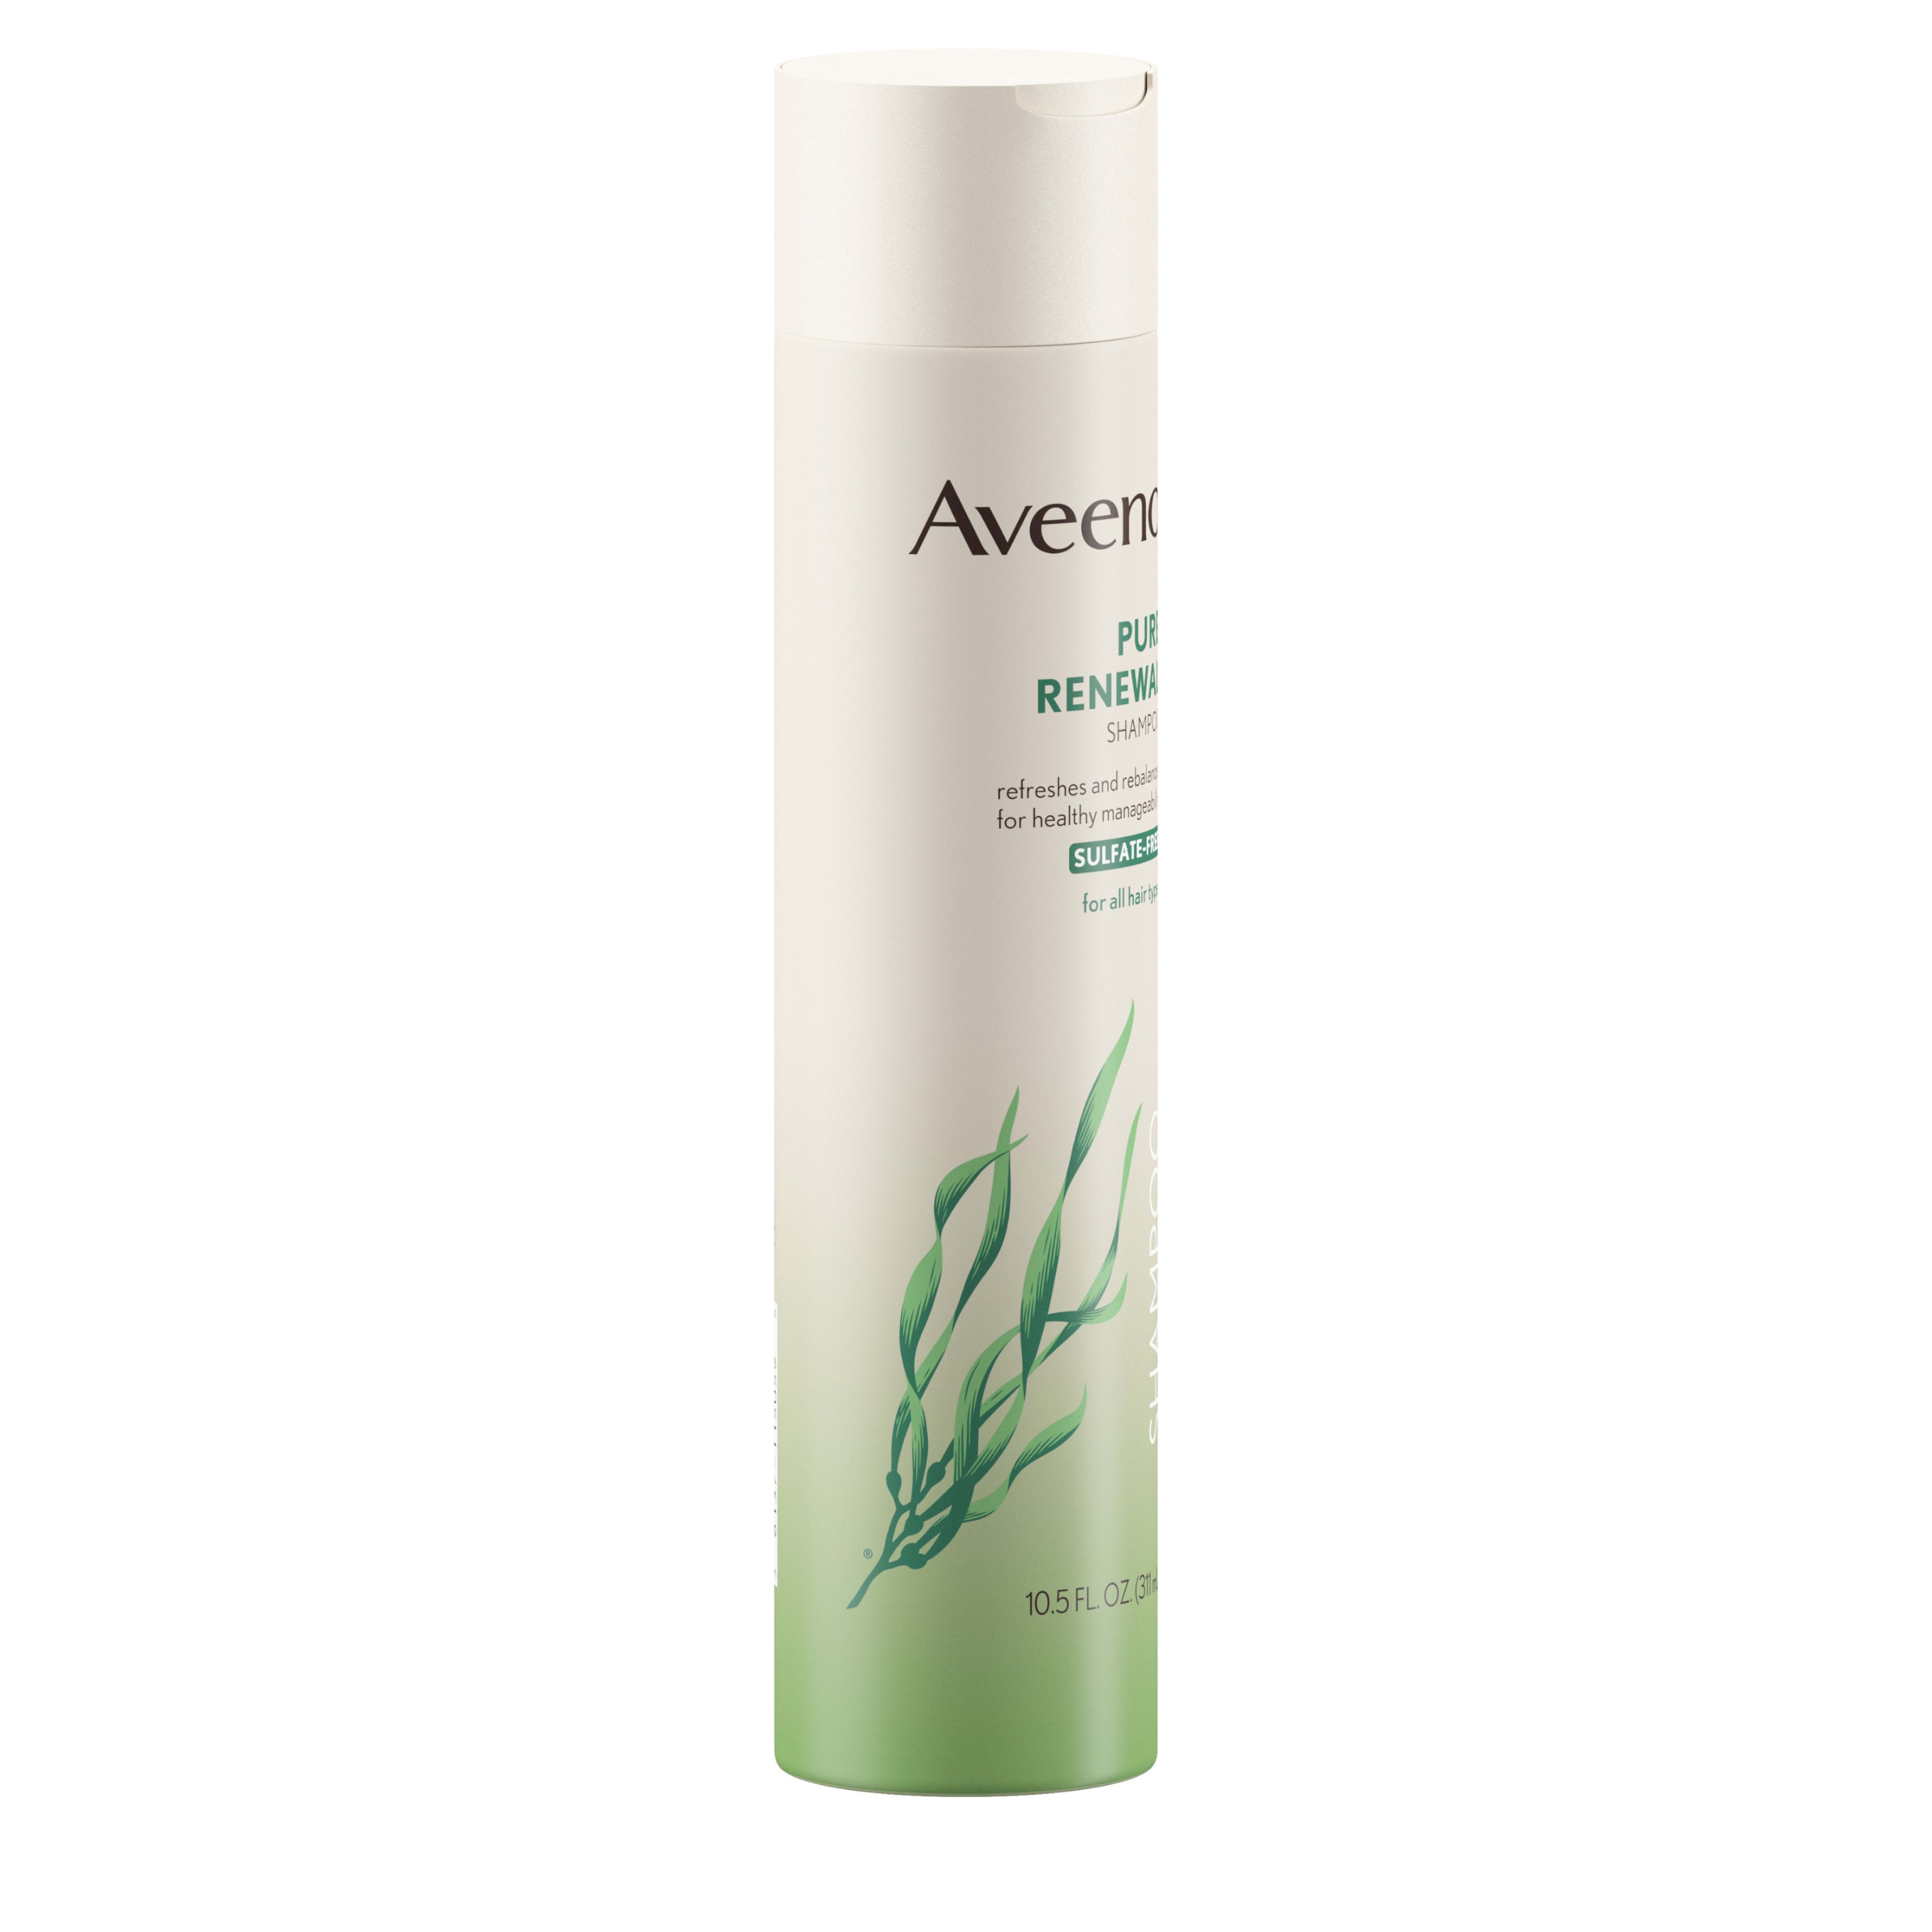 Aveeno Active Naturals Pure Renewal Moisturizing Daily Shampoo with Seaweed Extract, 10.5 fl oz - image 4 of 9